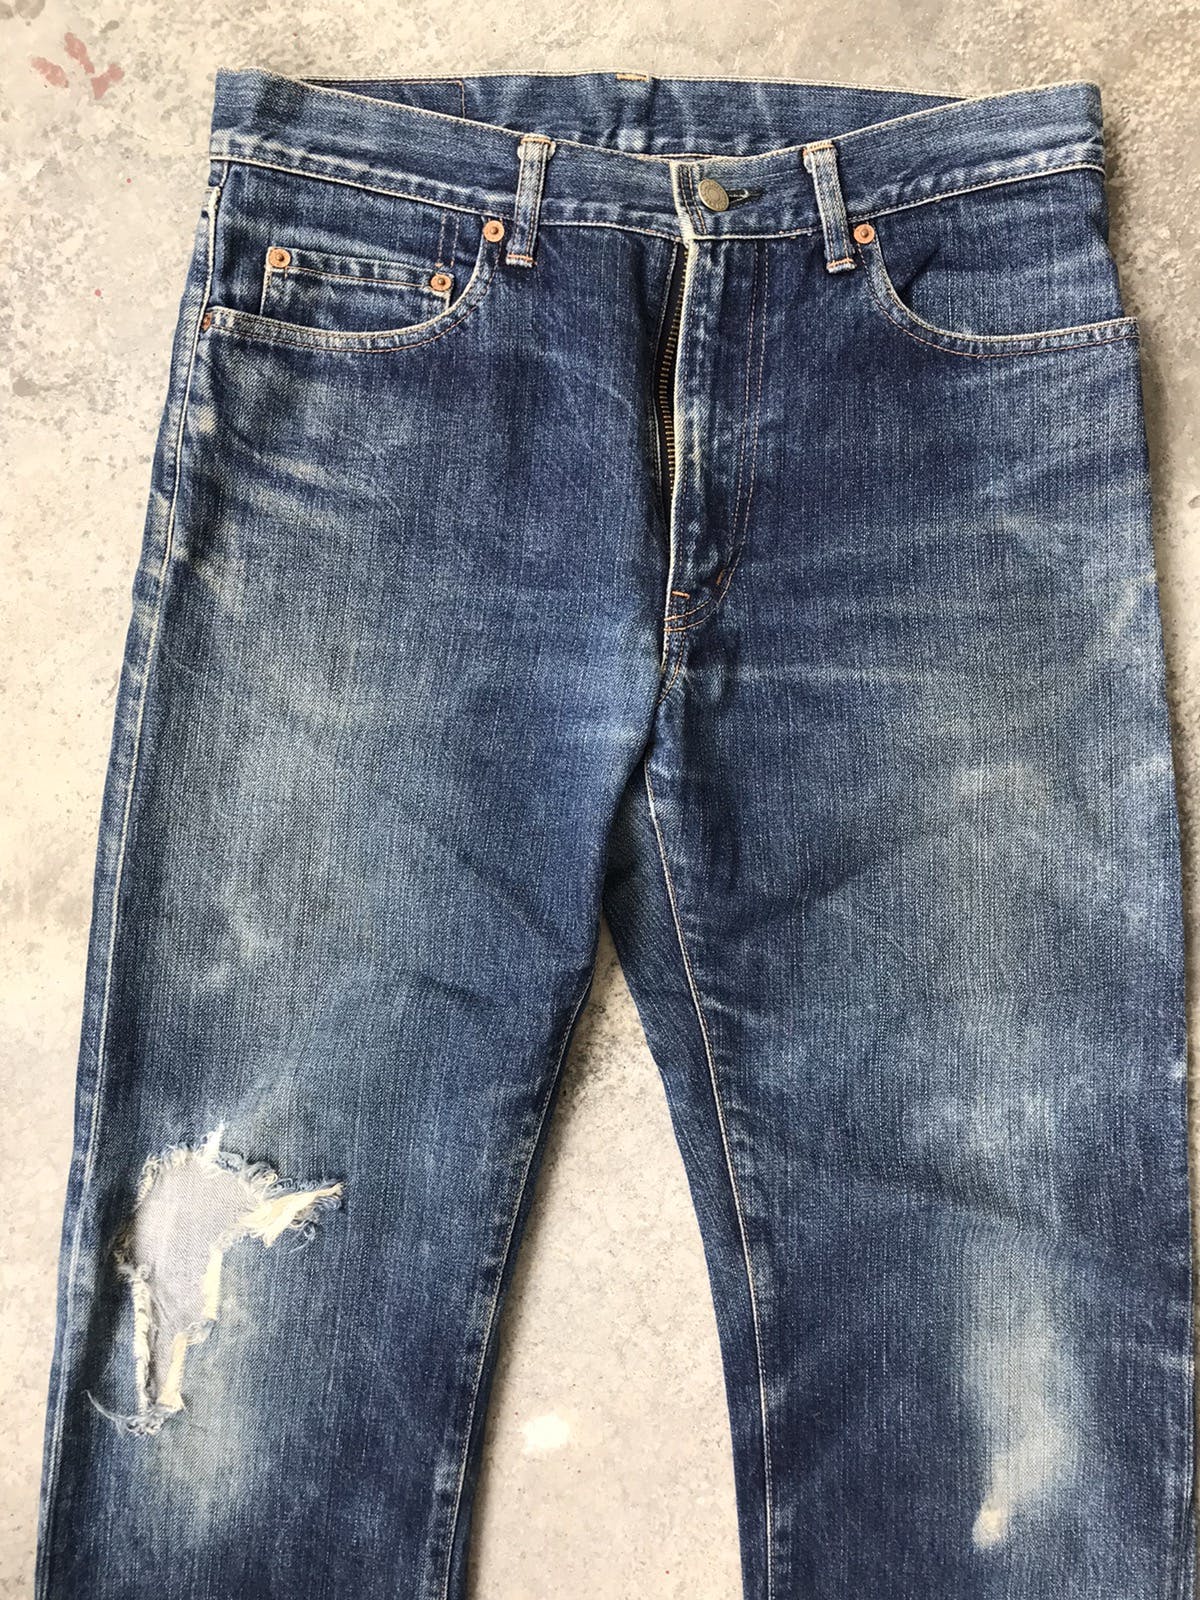 90s Hollywood Ranch Marrket Denim Jeans - 13